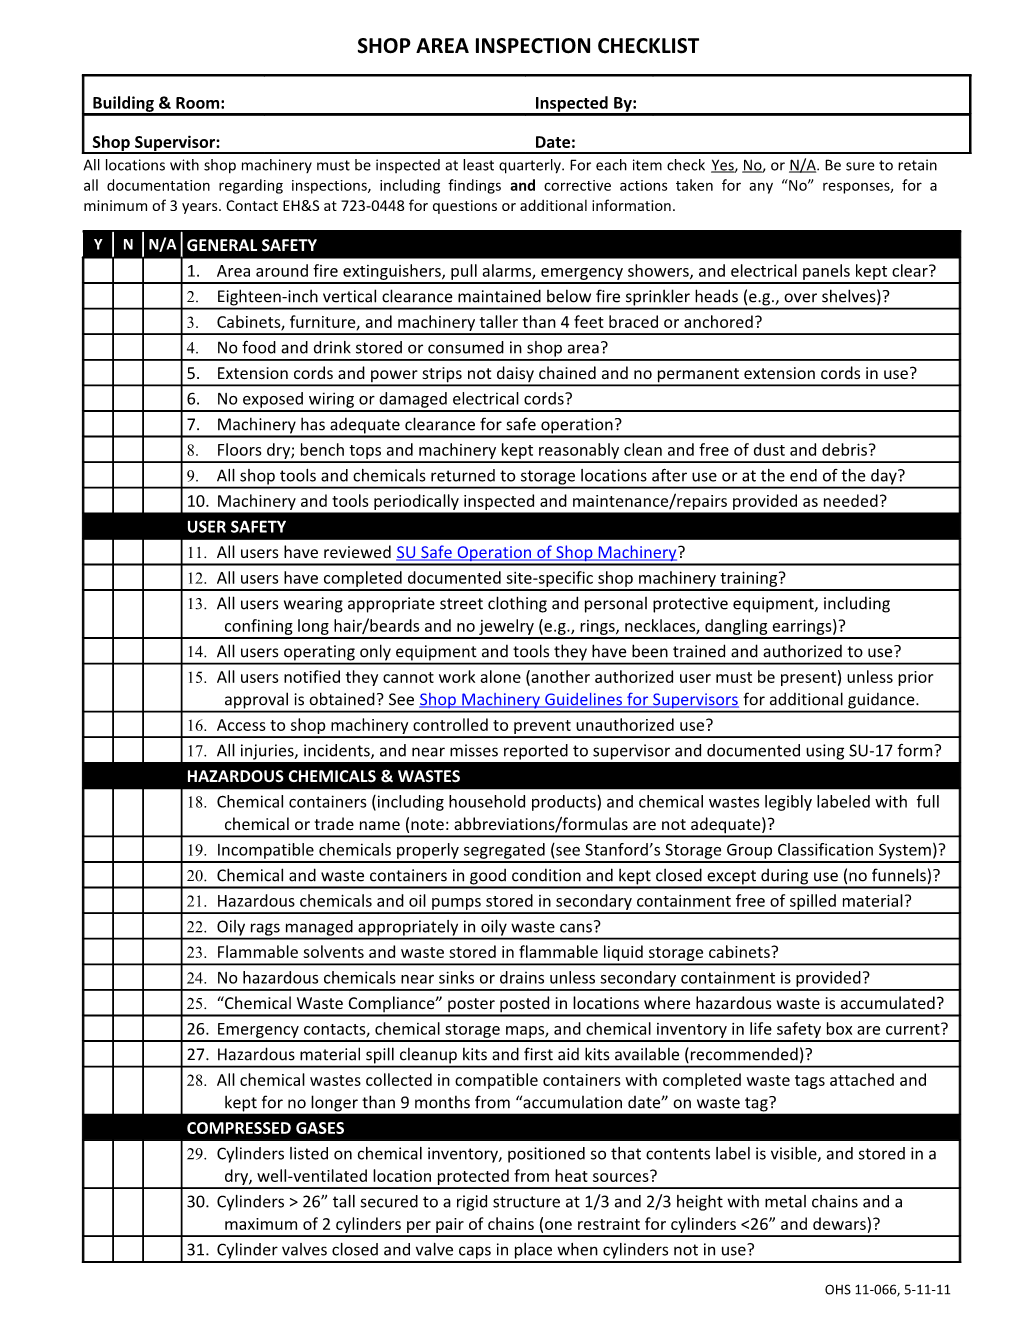 Laboratory & Shop Inspection Checklist